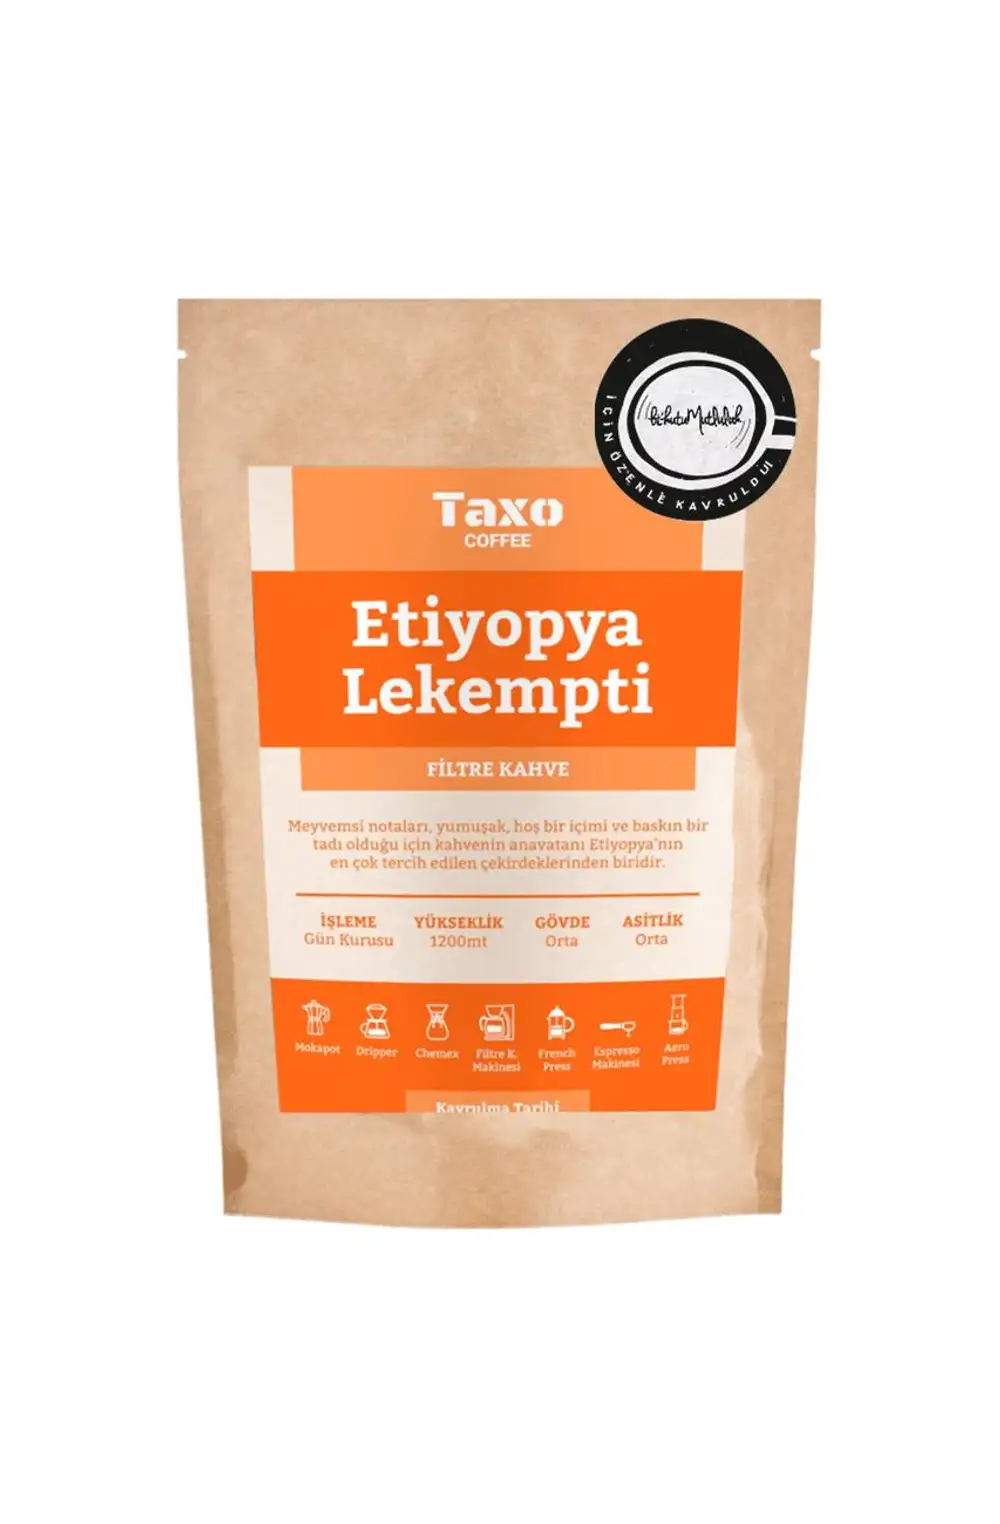 Filtre Kahve - Etiyopya Lekempti Taxo Coffee 50 gr.